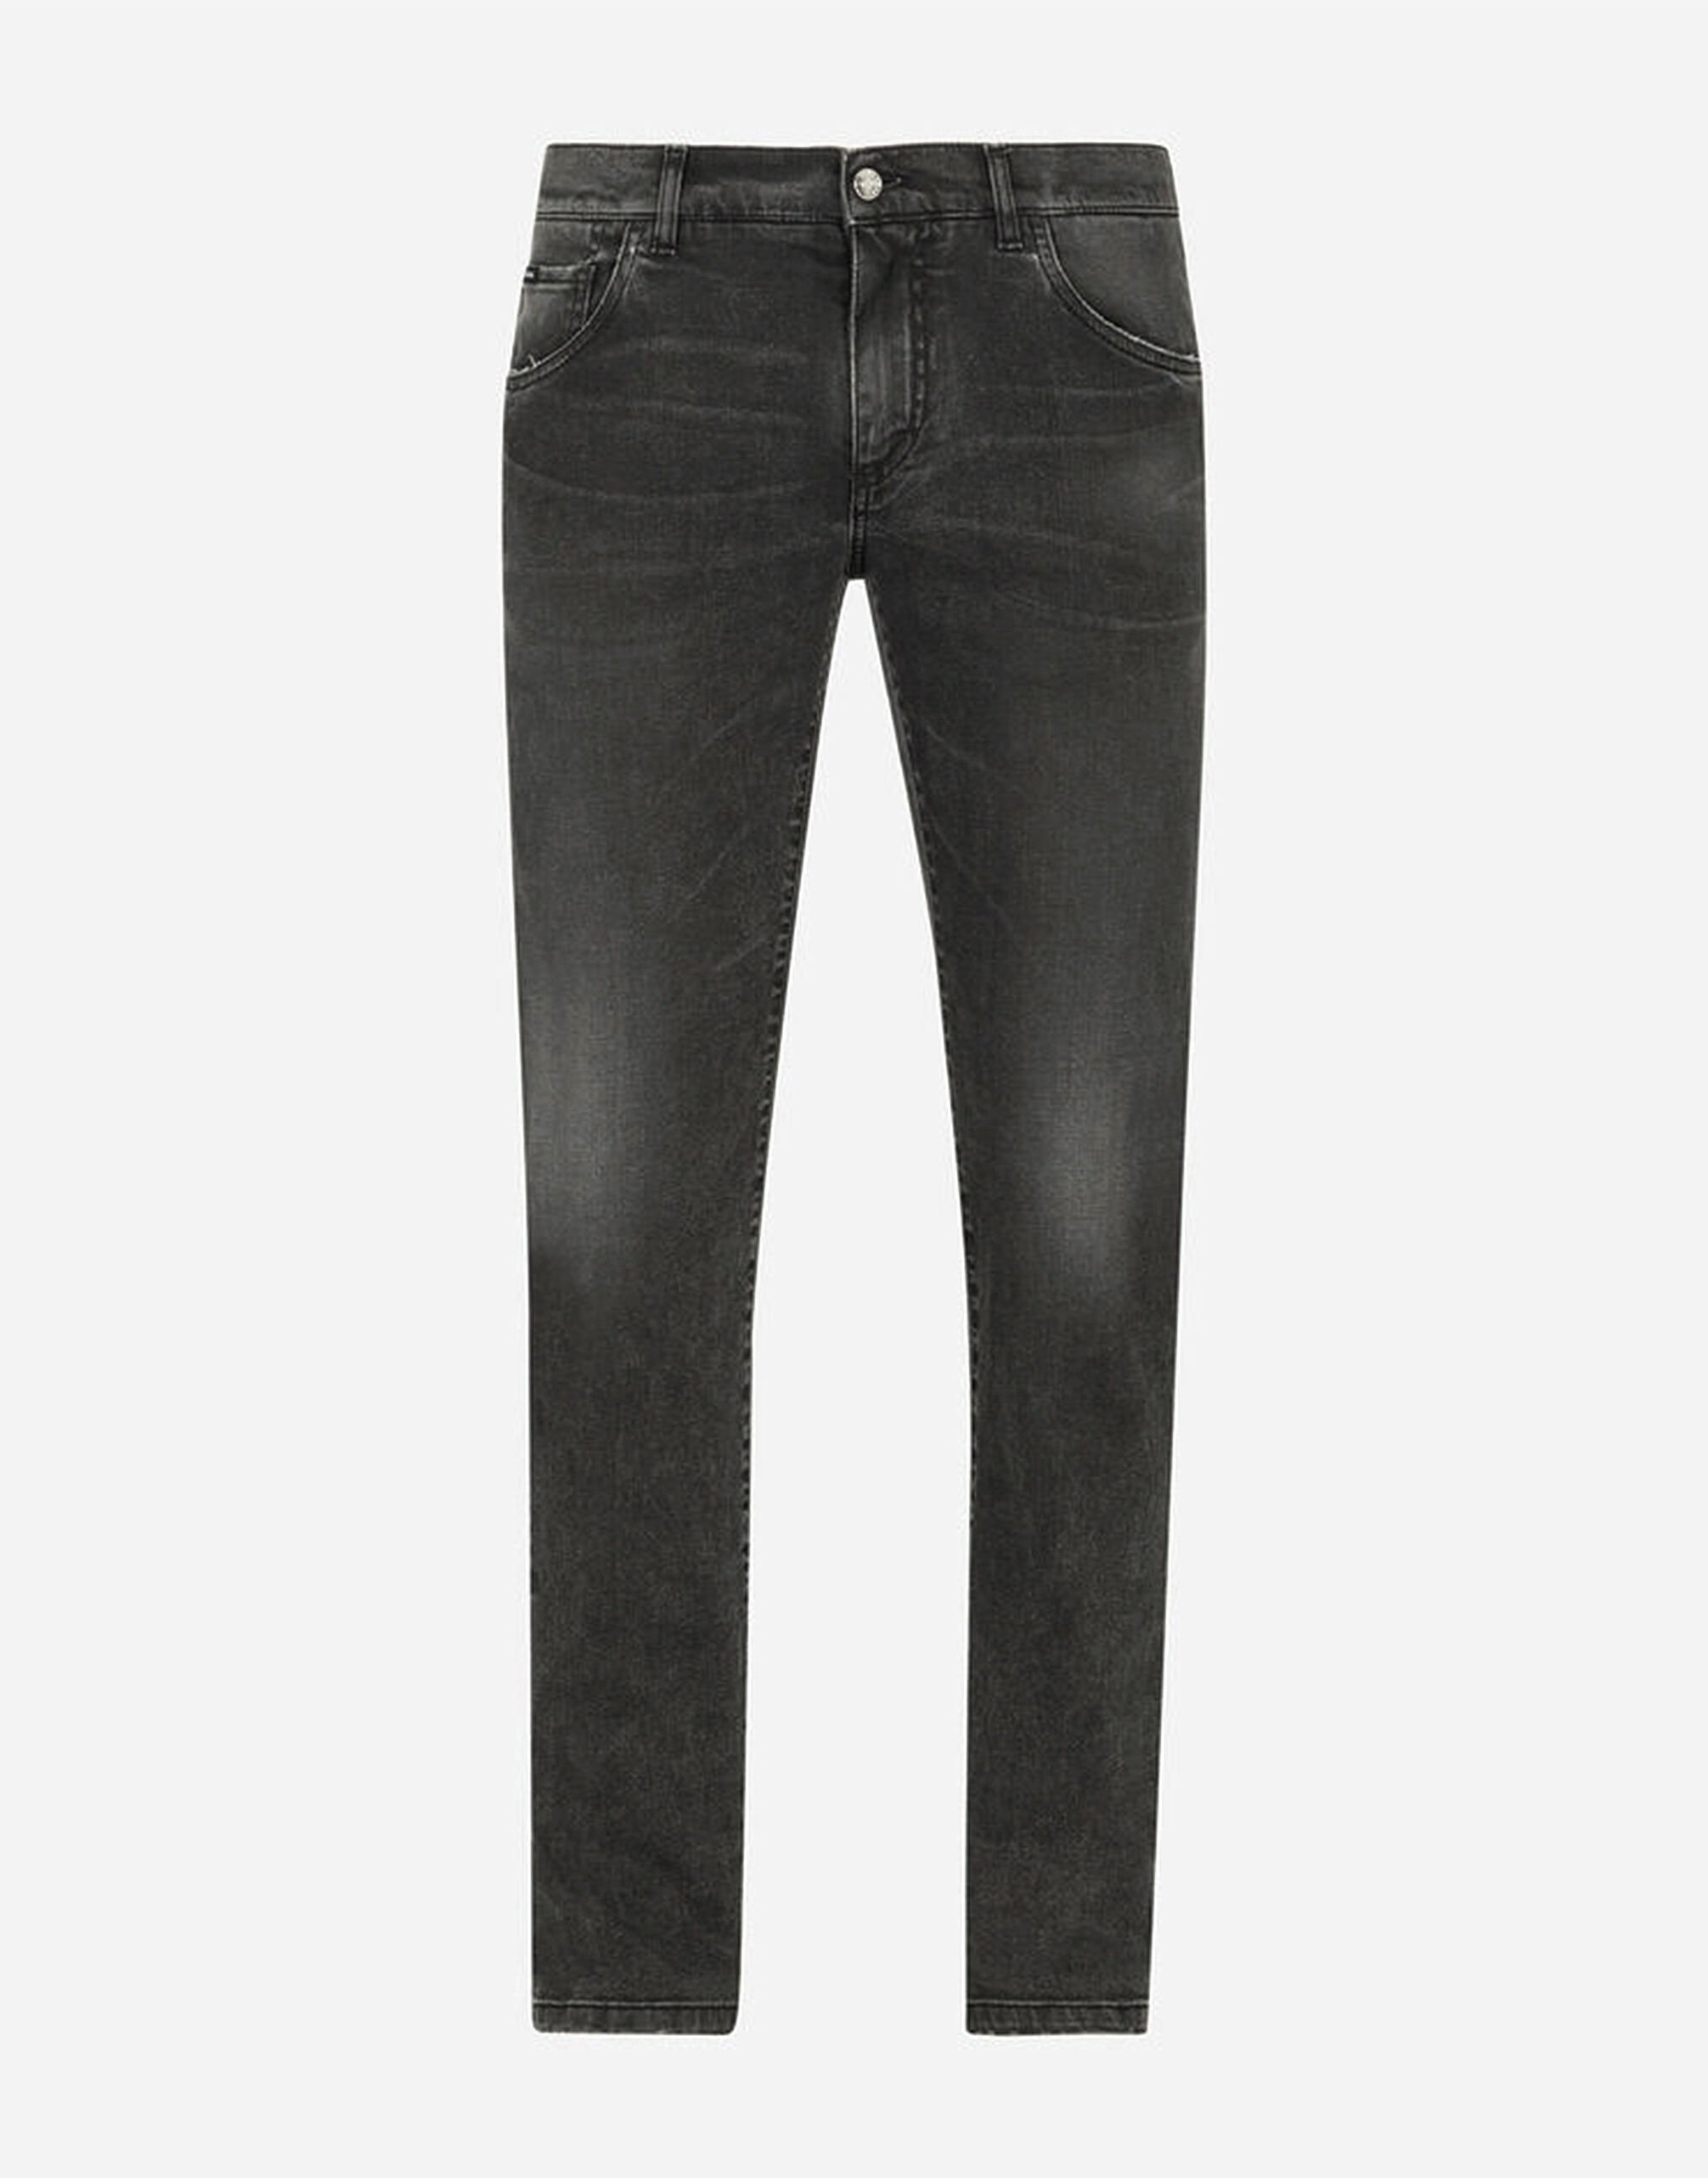 Dolce & Gabbana Gray wash skinny stretch jeans Black GY6UETFUFJR